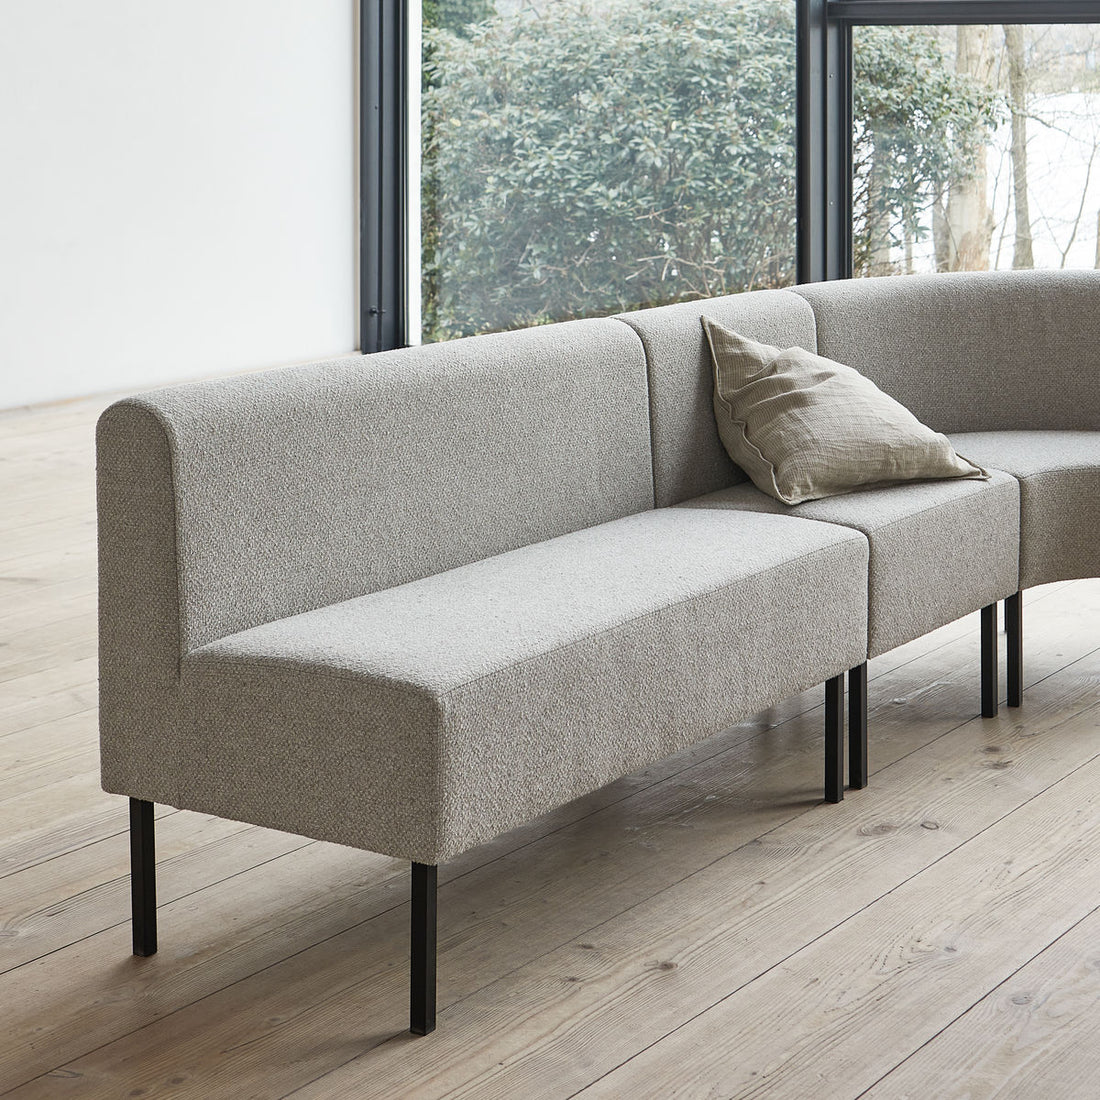 Huslege - Sofa, 2 seters, naturlig - L: 120 cm, W: 60 cm, H: 80 cm